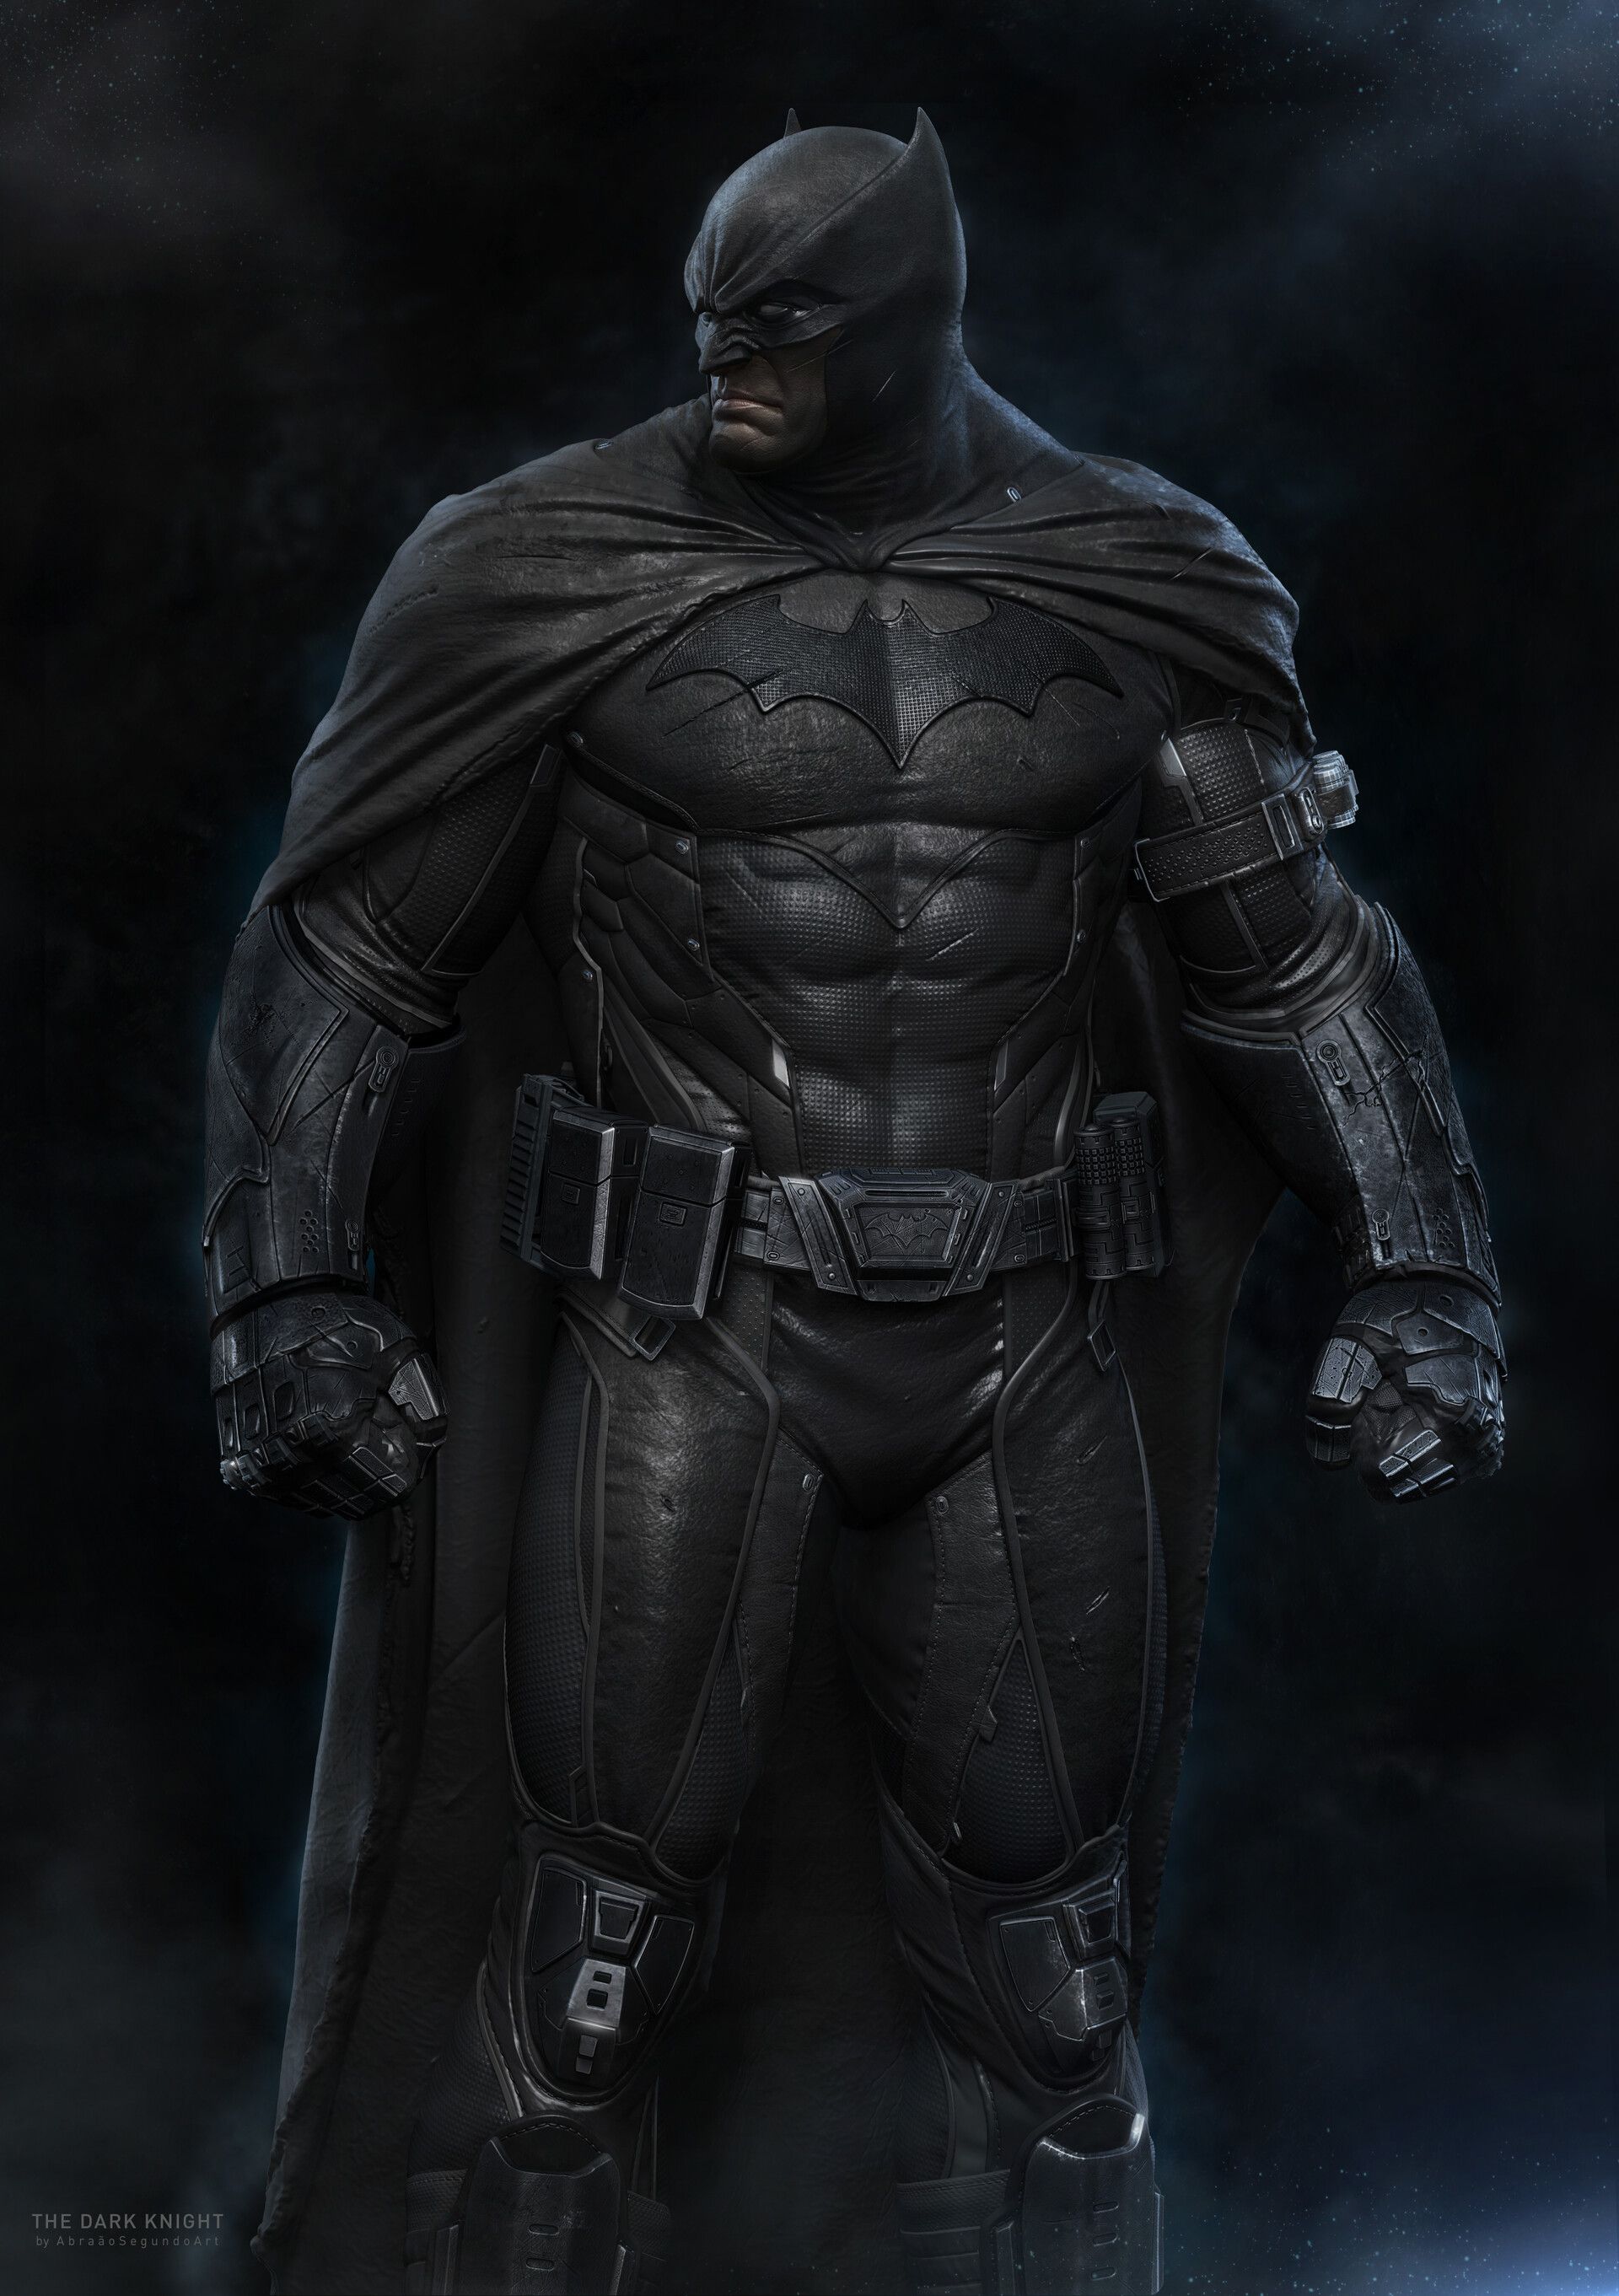 x13 batman phone wallpaper. Thumbnail: The Dark Knight by Abraão Segundo